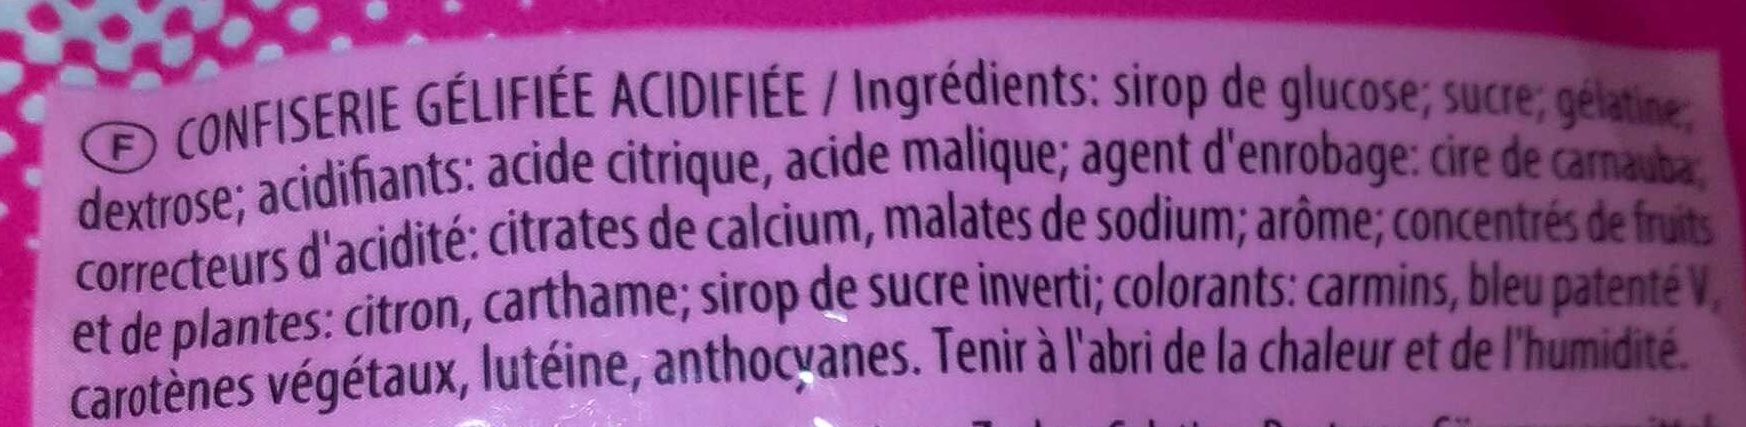 Haribo délir - Ingredienser - fr